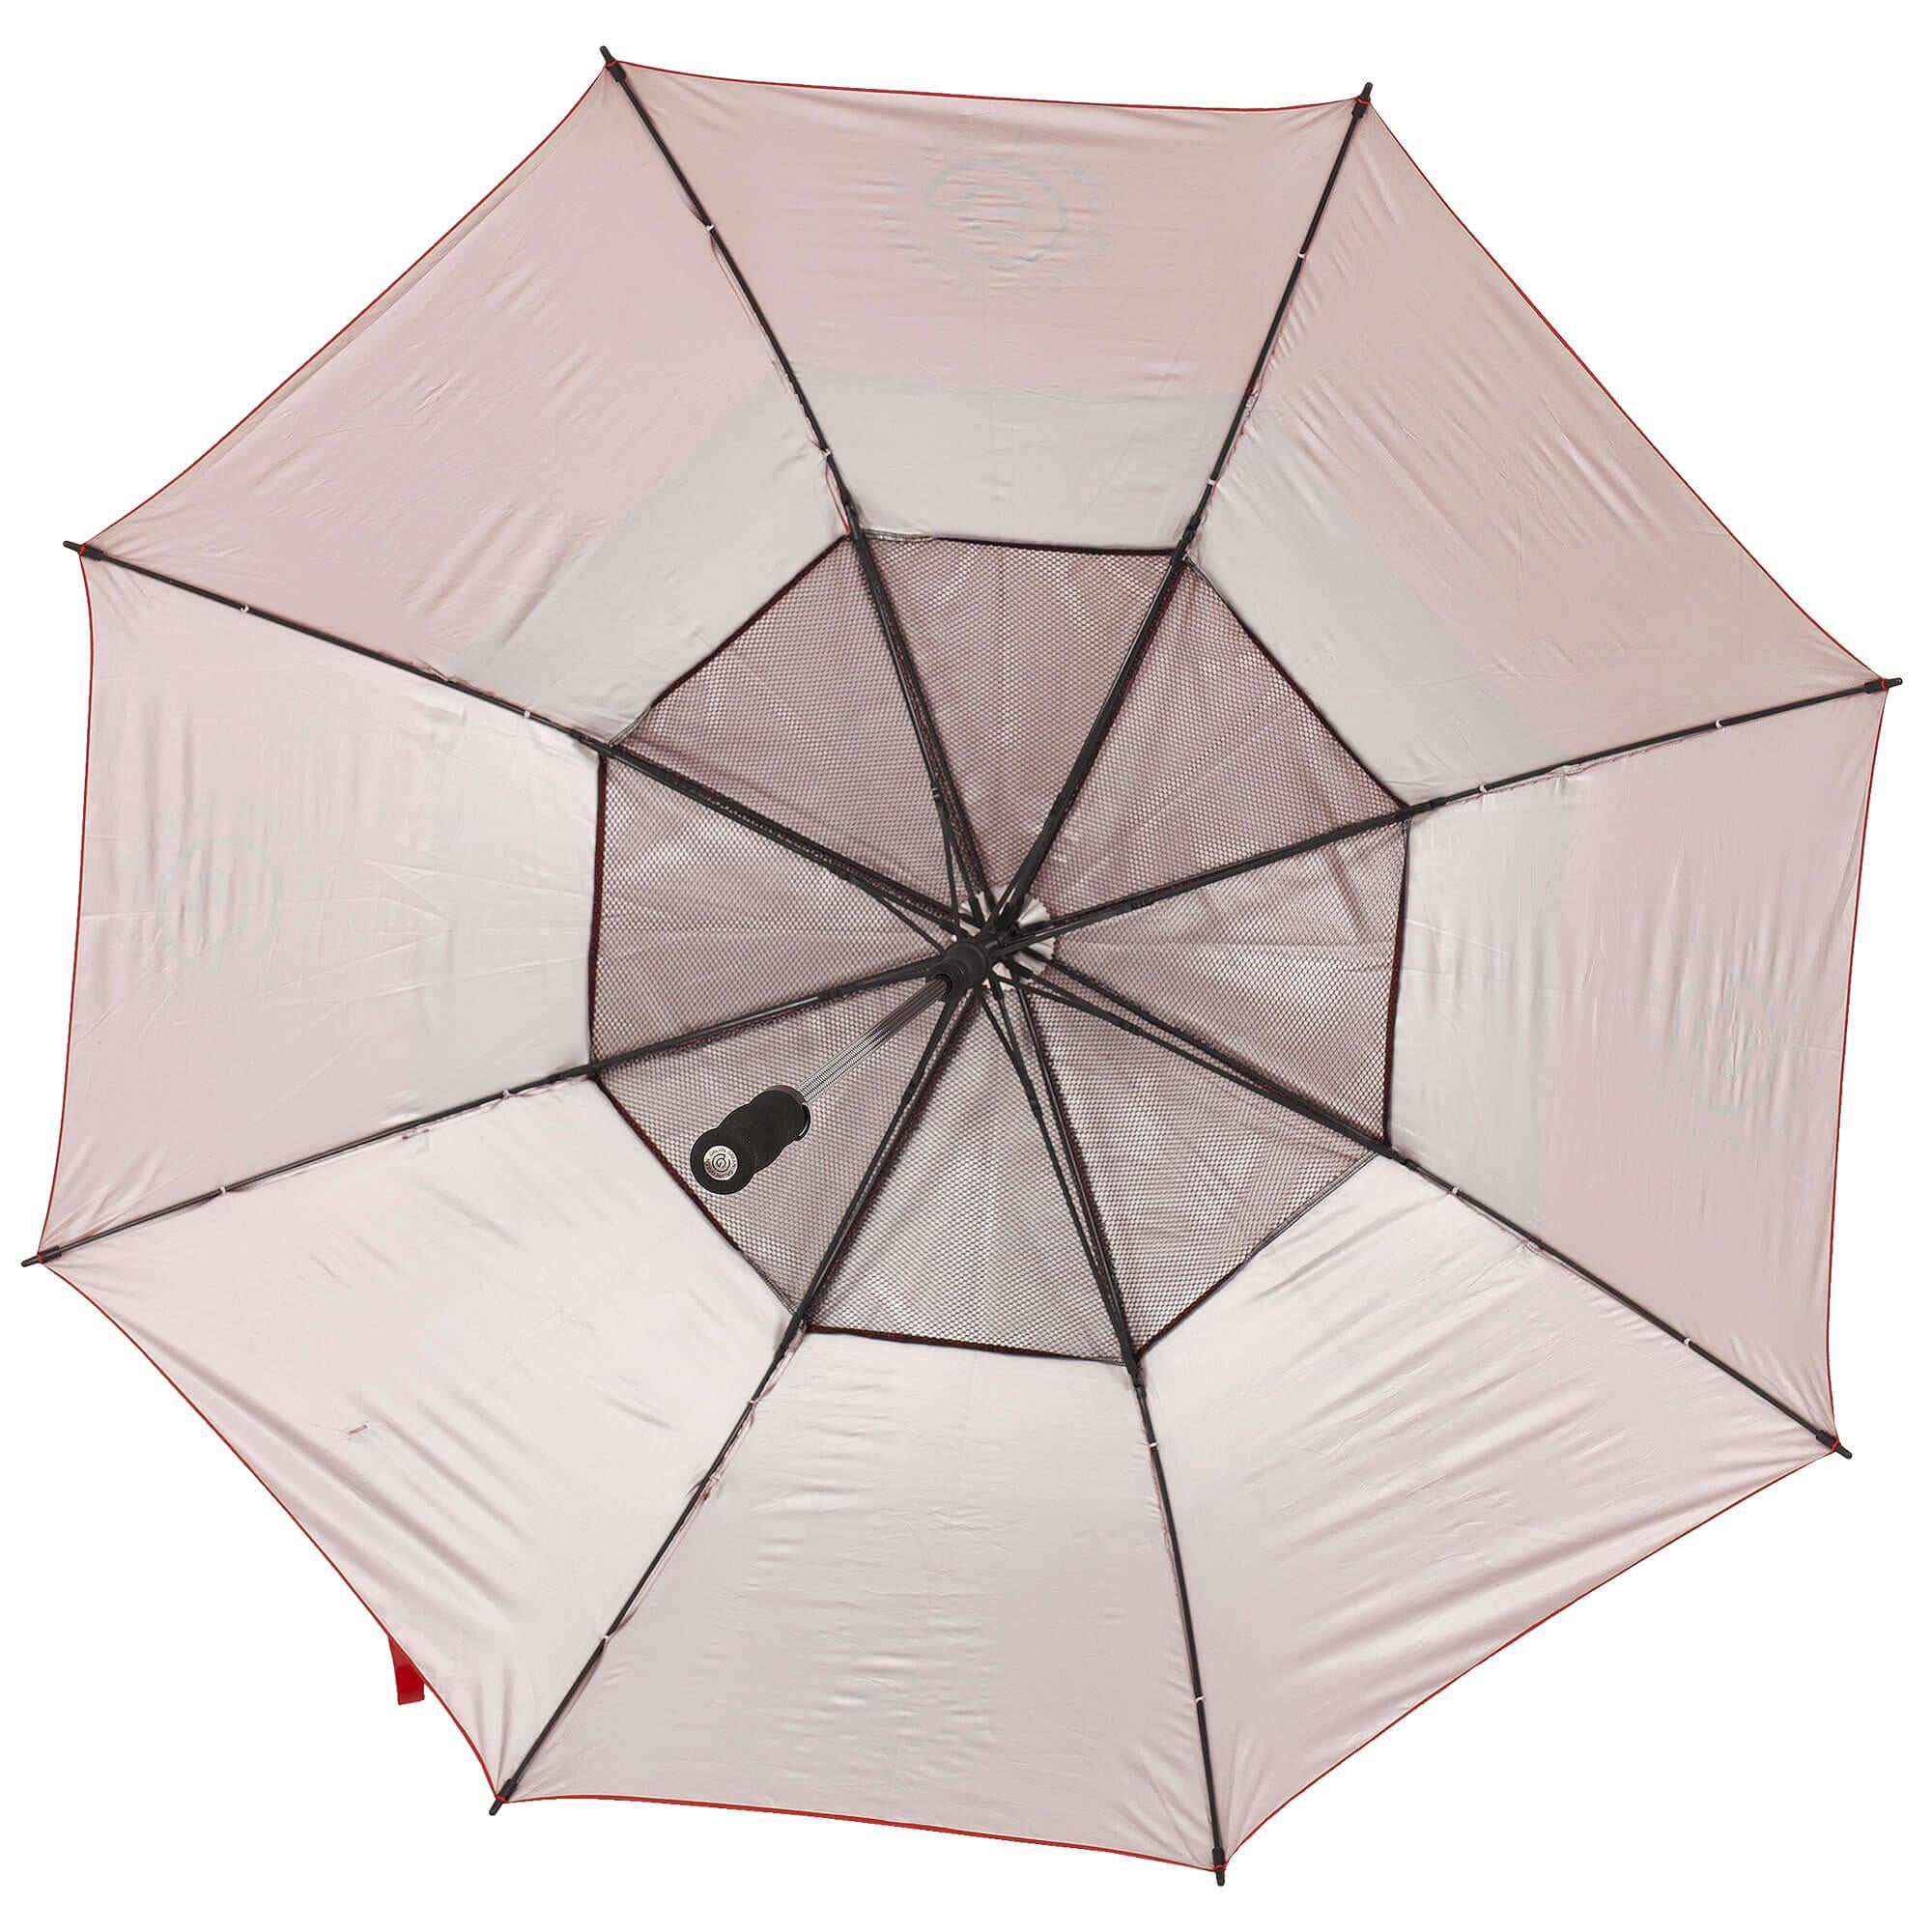 galvin-green-tromb-golf-umbrella-red-9730